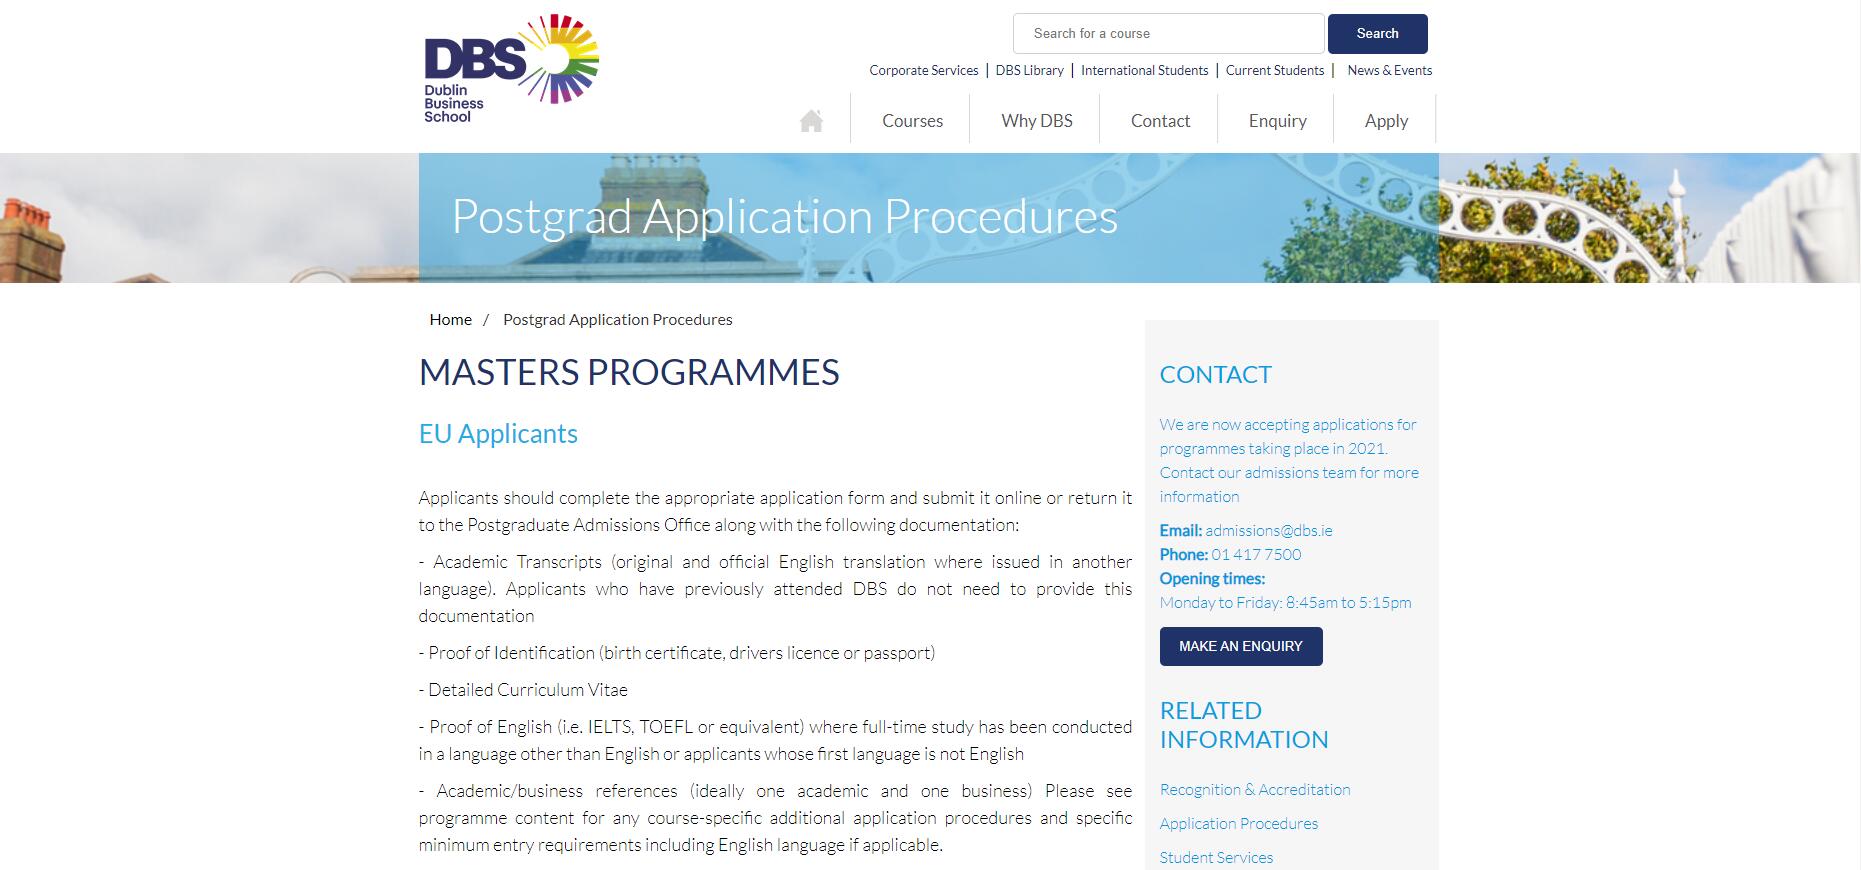 Postgraduate Application Procedures - Dublin Business School